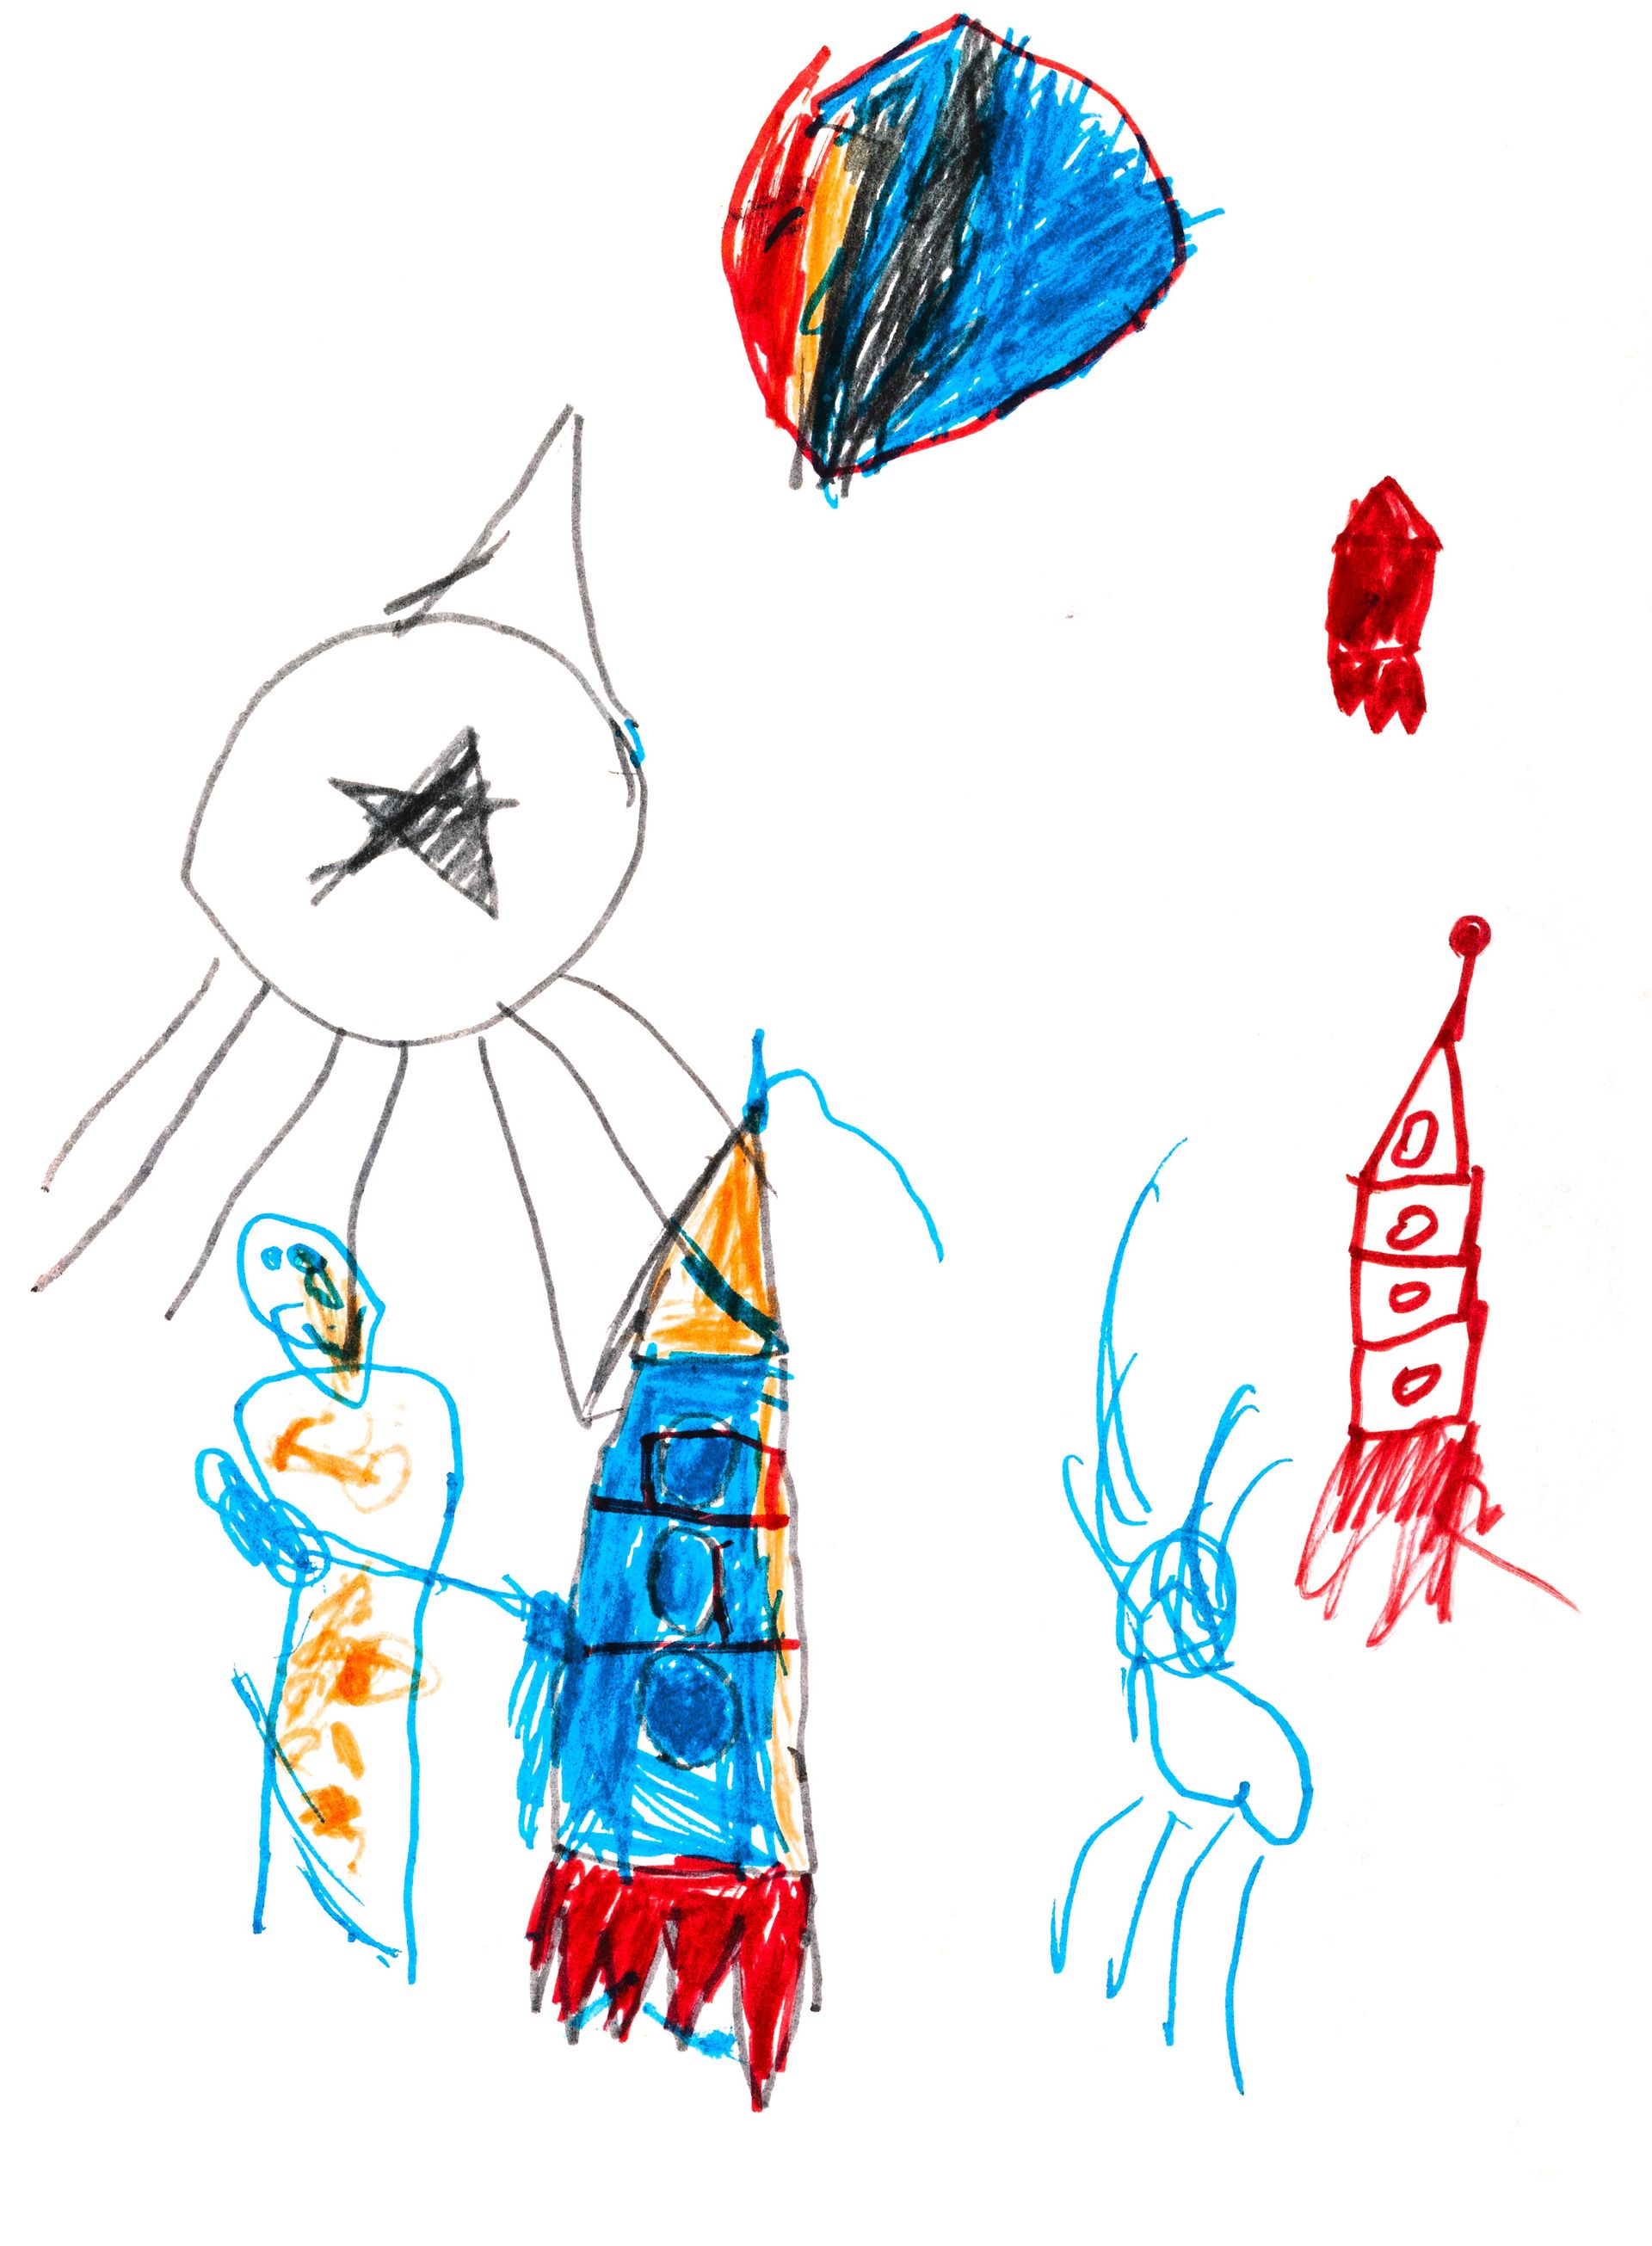 Children's drawing of rocket ships in felt pens